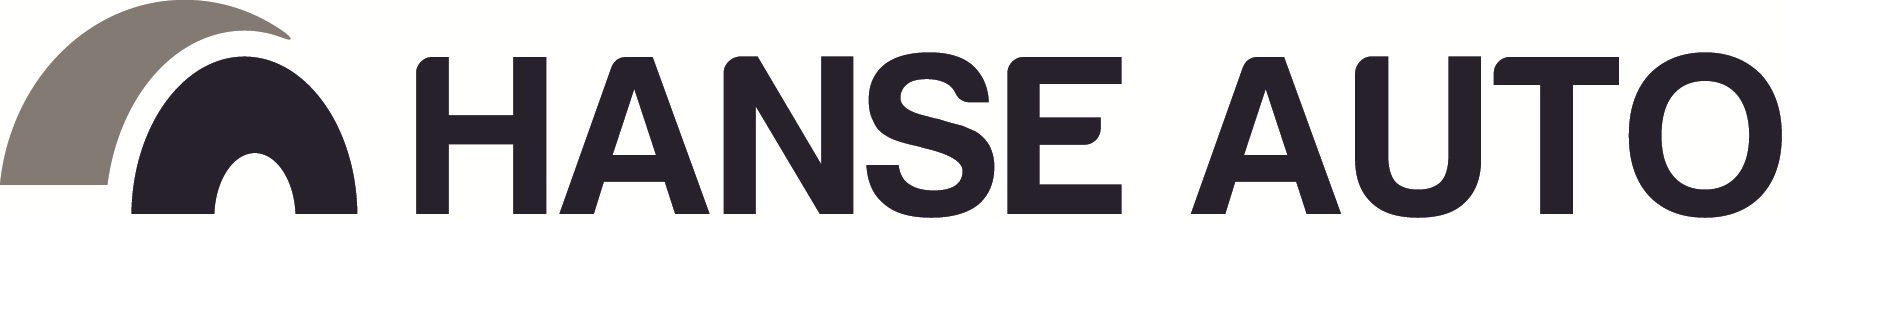 Hanseauto Logo